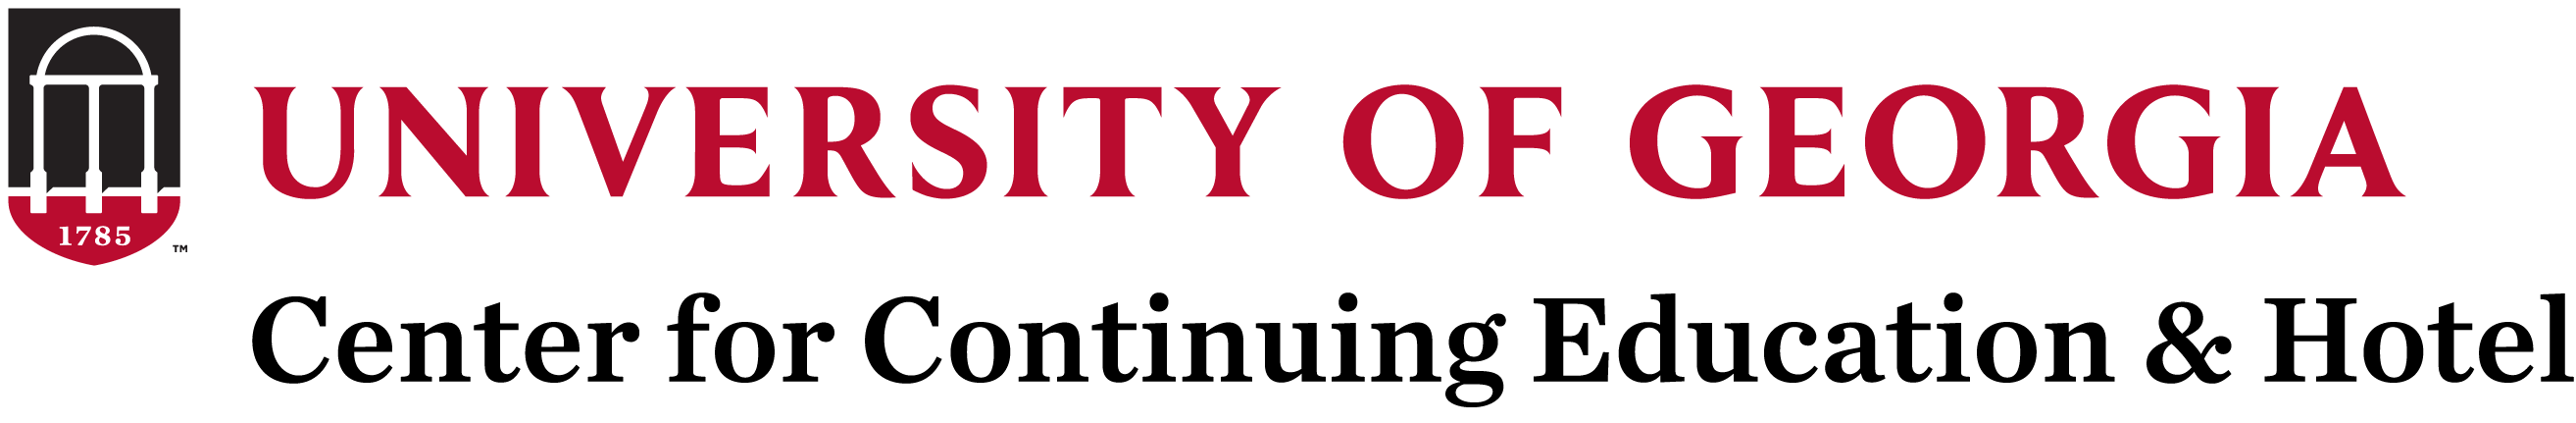 University of Georgia Center for Continuing Education & Hotel logo